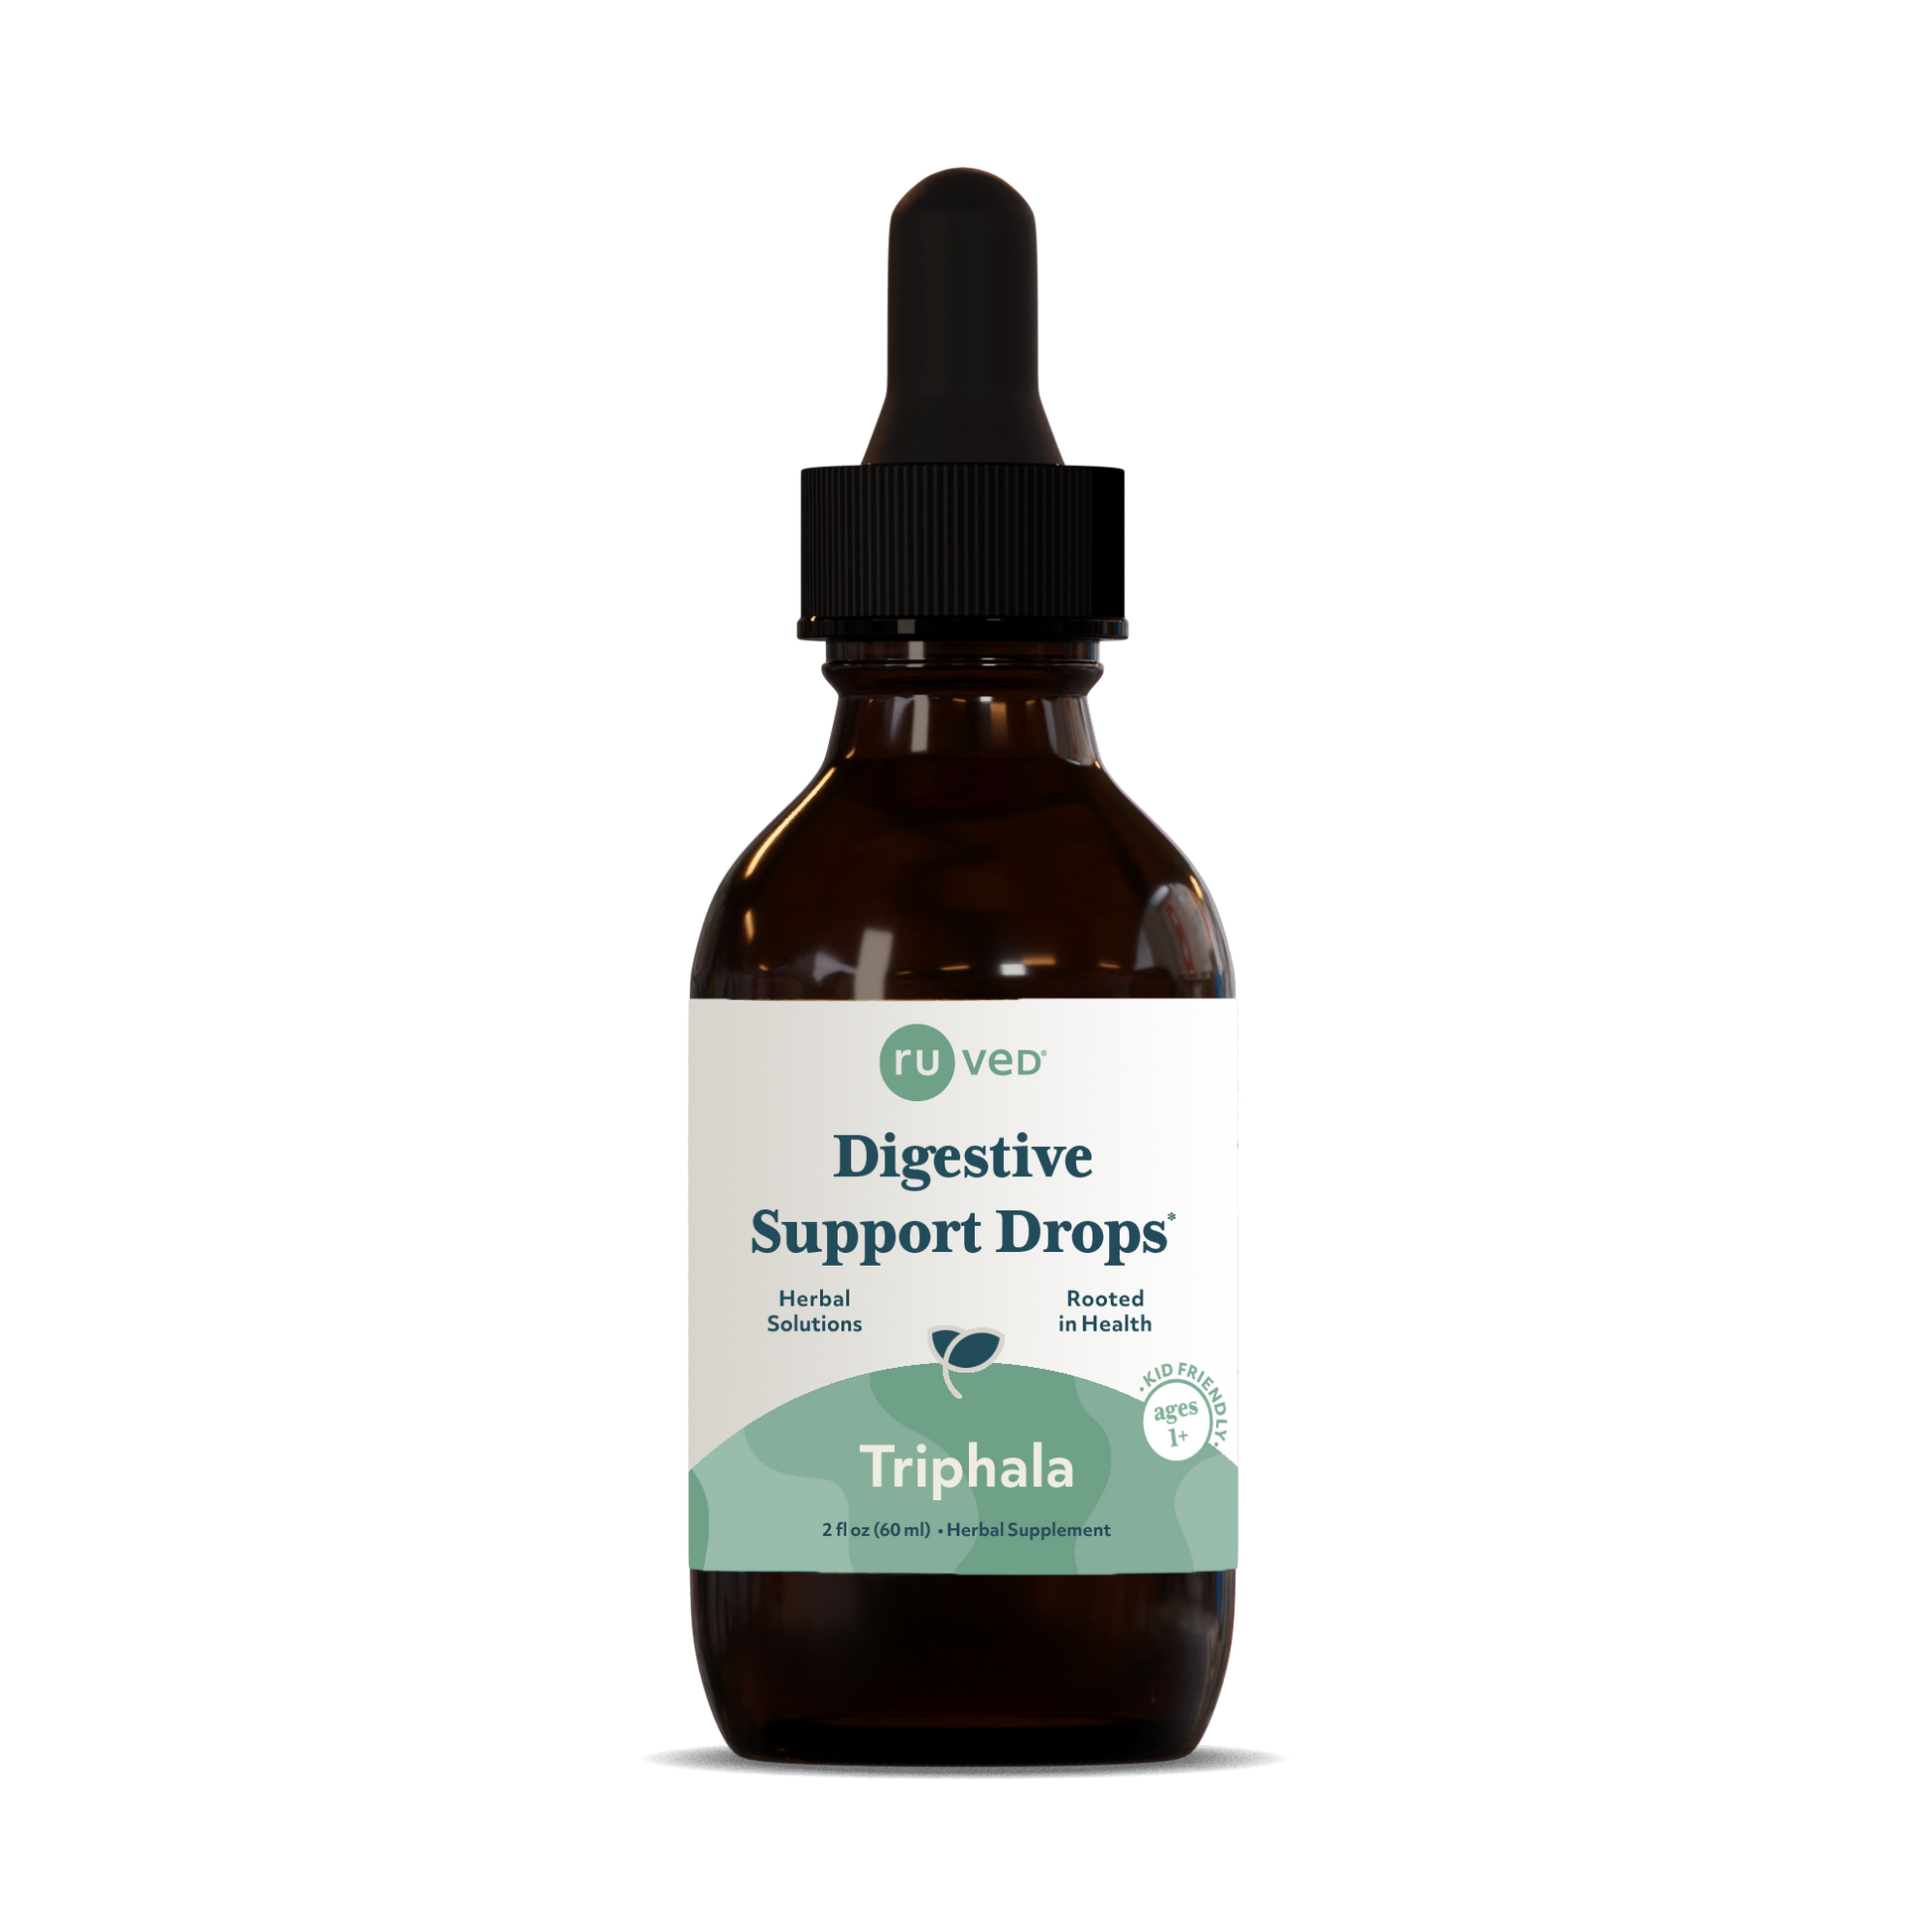 Triphala Drops - Ayurvedic Digestive Support, 60ml Bottle, Herbal Blend for Gut Health and Digestion Detoxification.